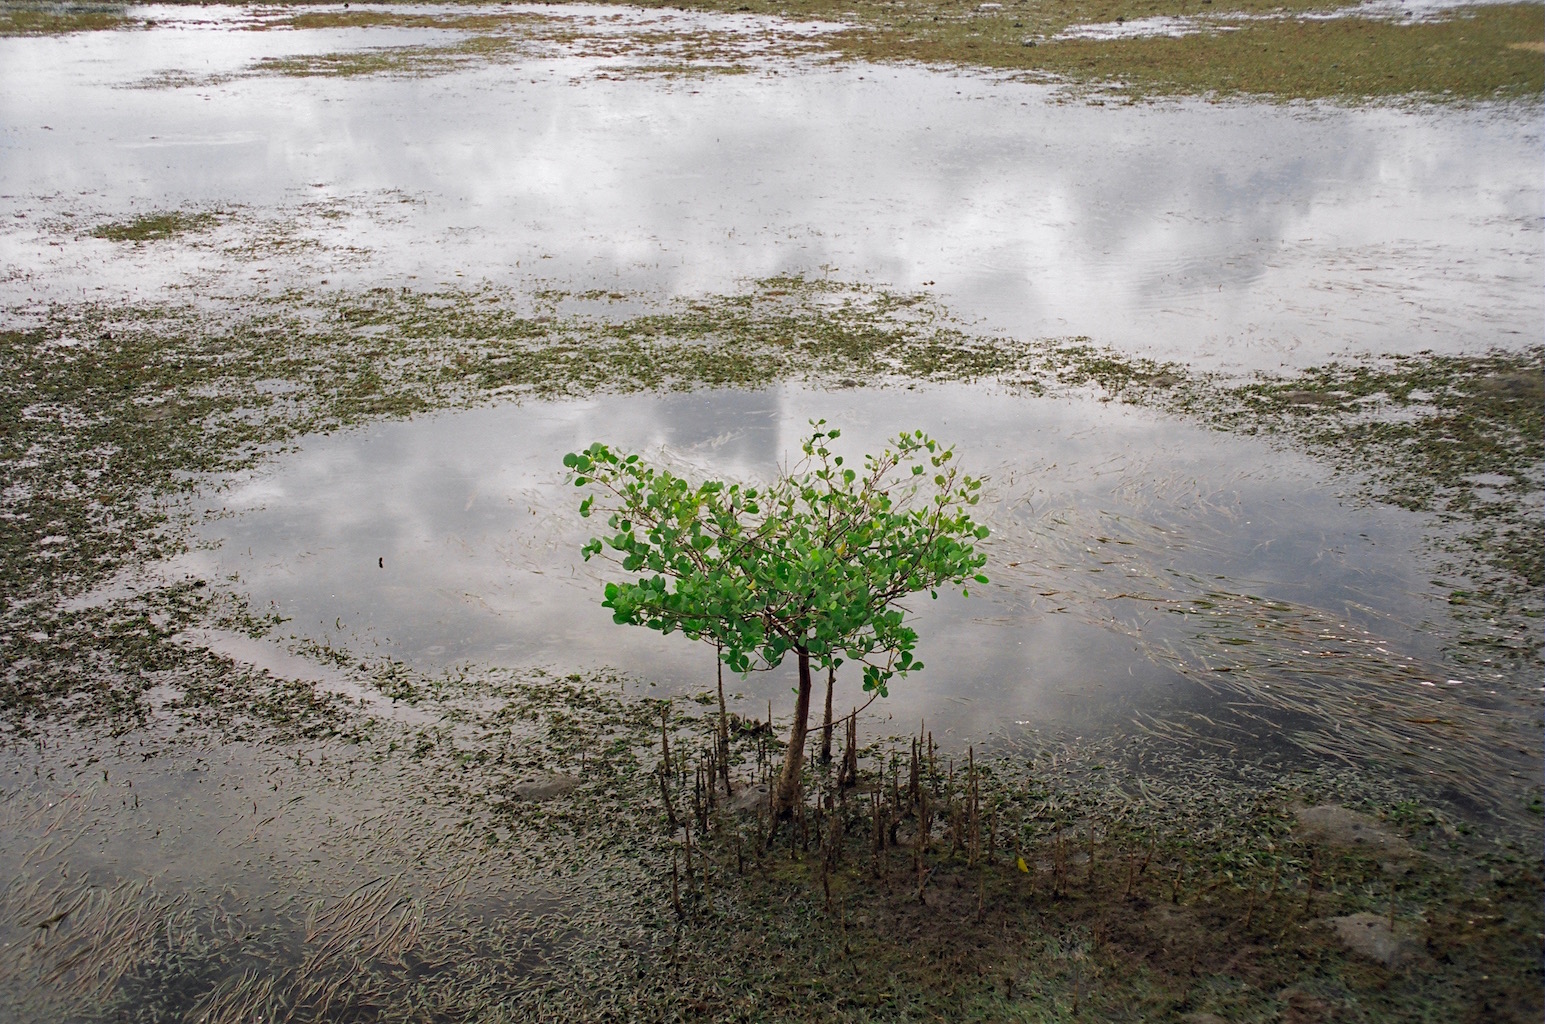 A medium-sized mangrove tree